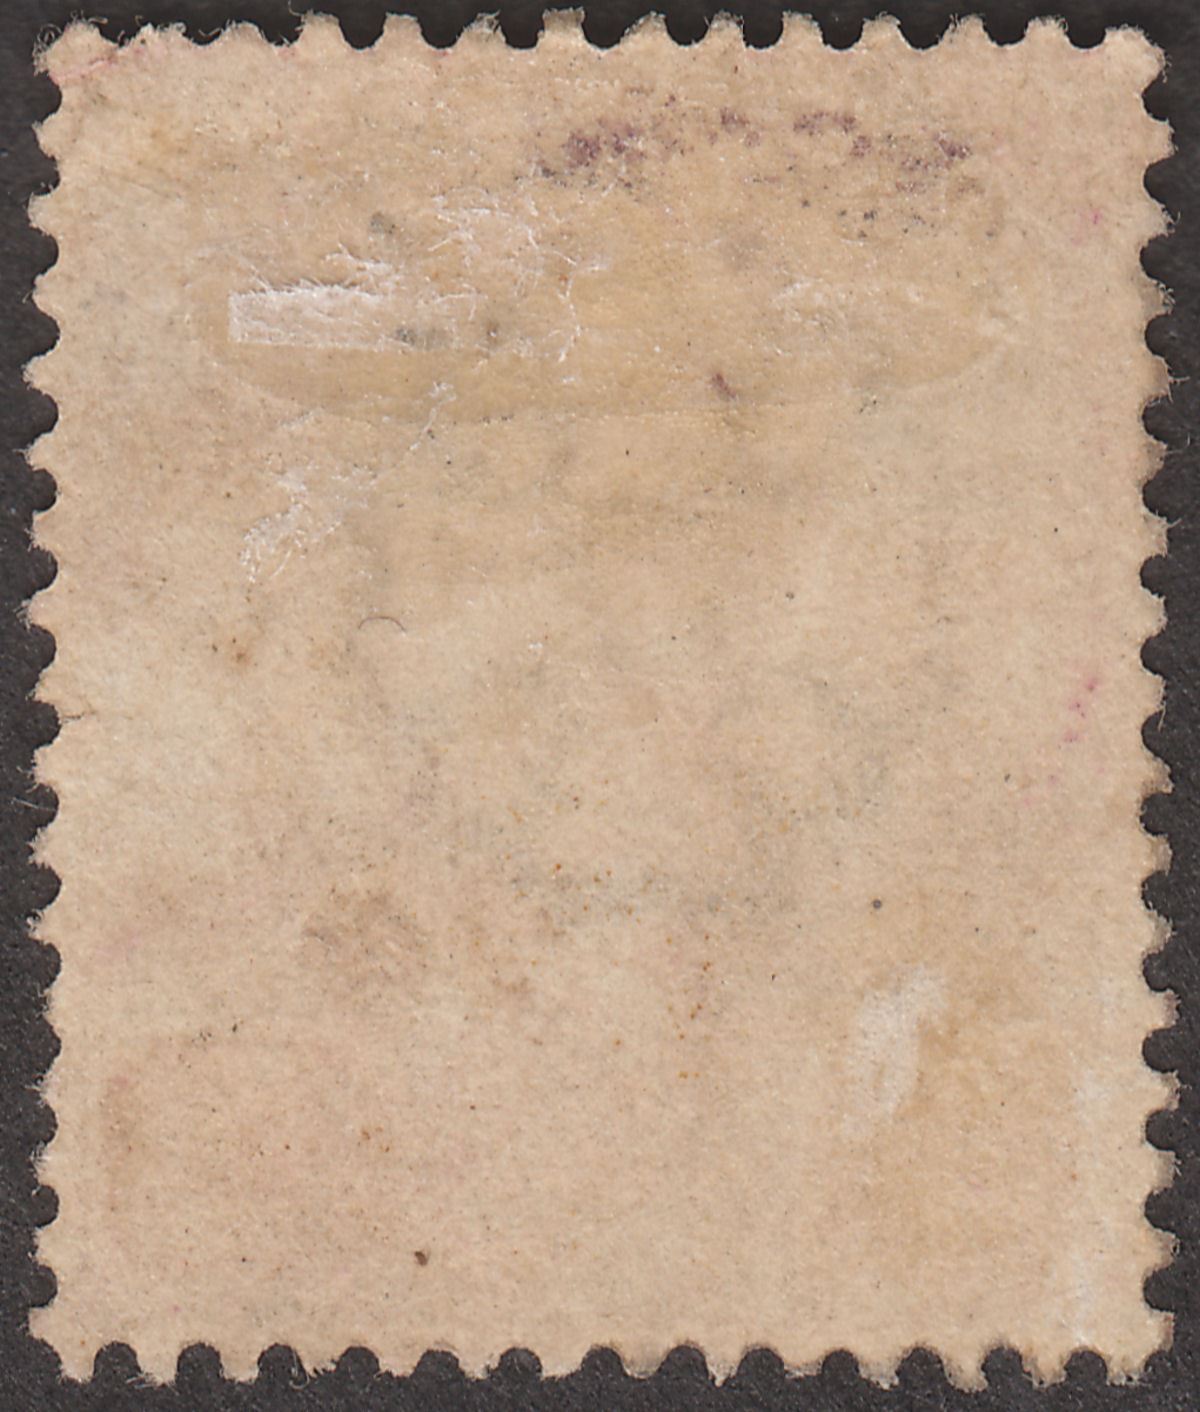 Malaya Johore 1898 Sultan Ibrahim $5 Dull Purple and Yellow Fiscally Used SG53